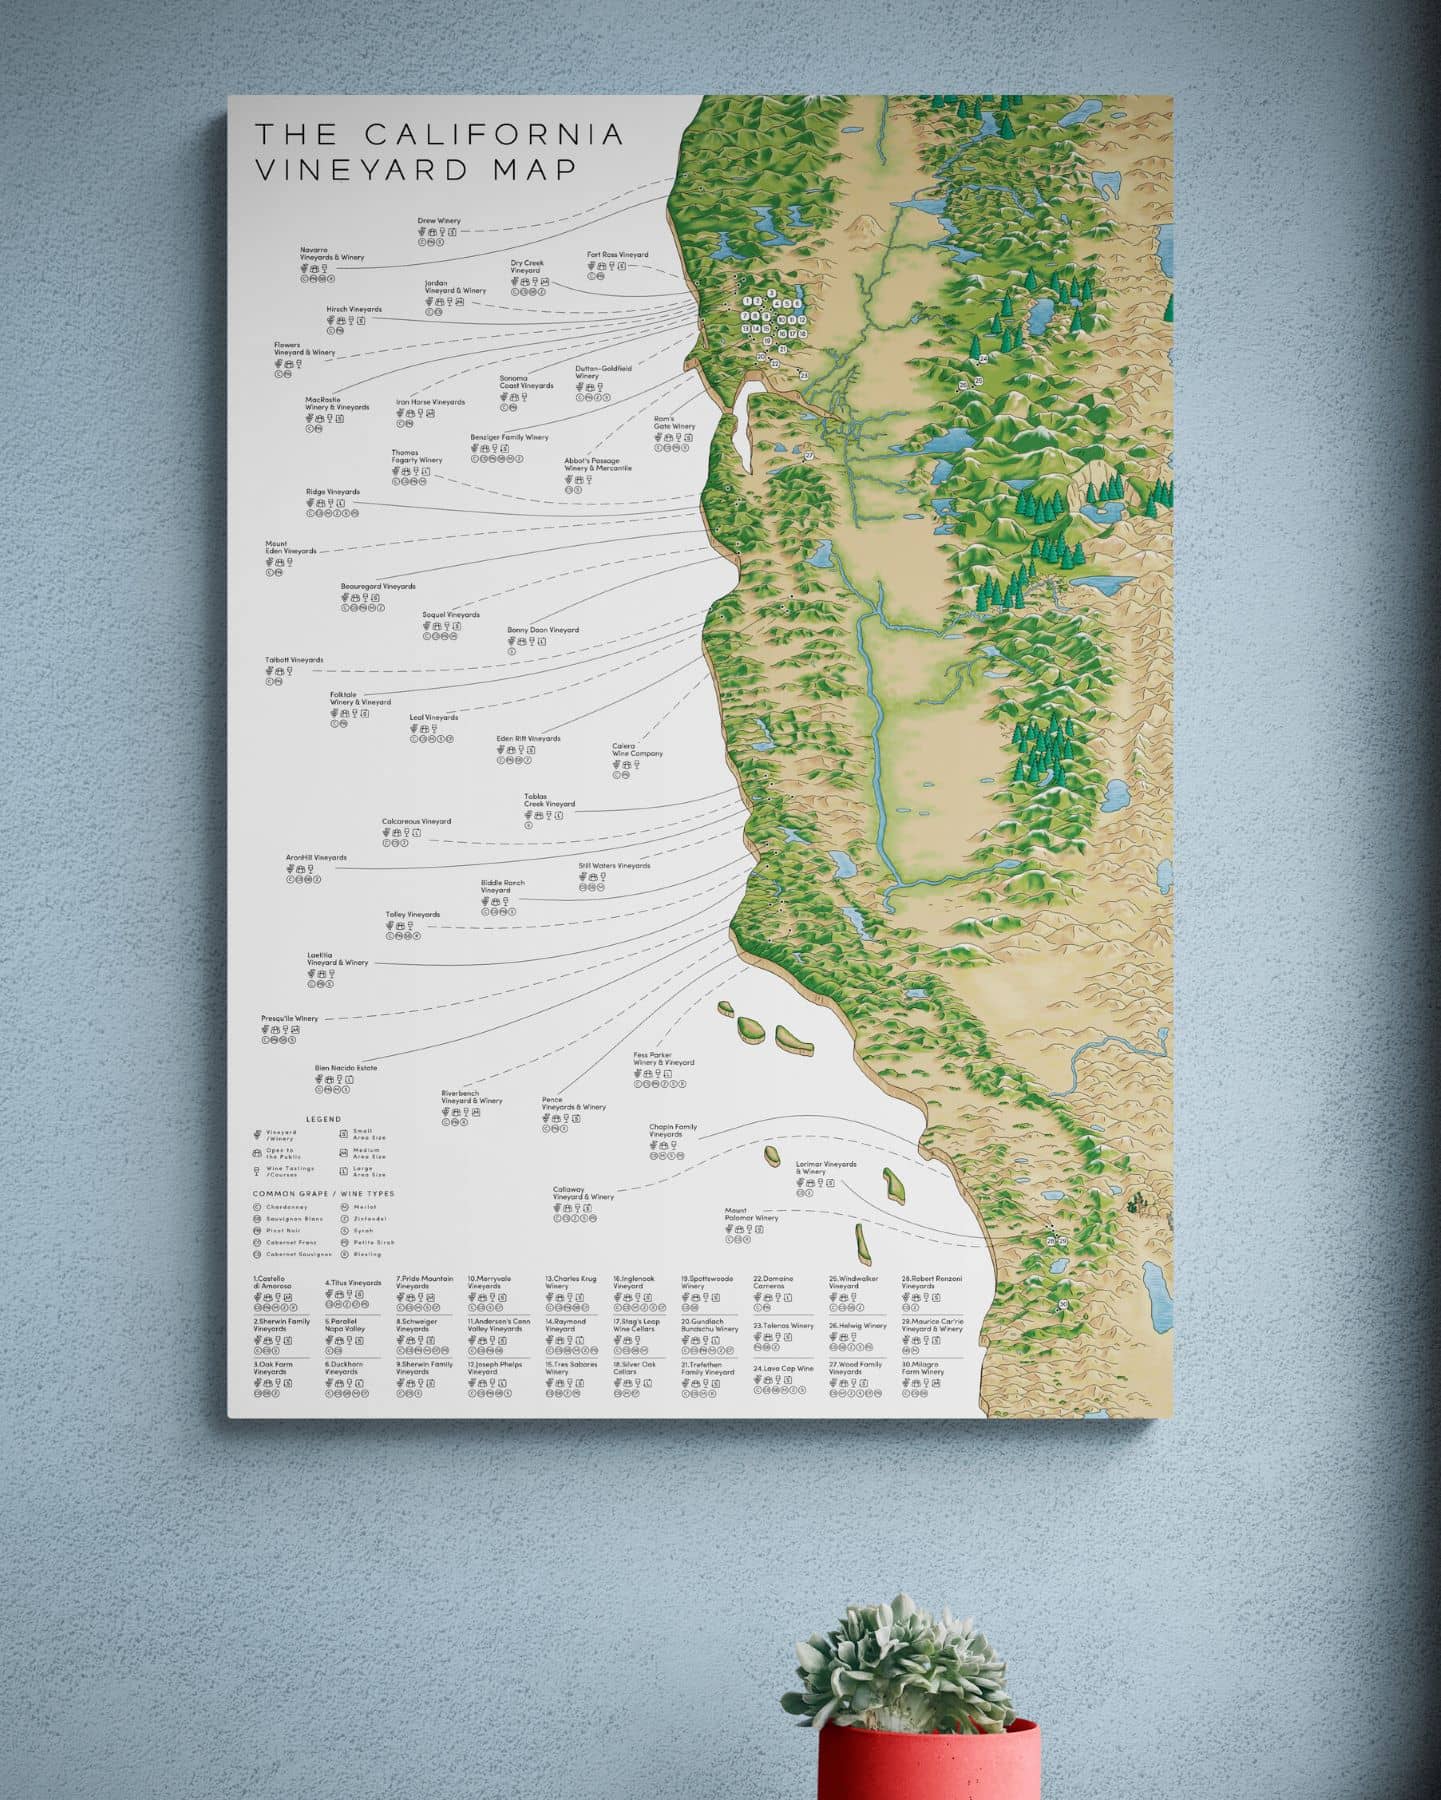 The California Vineyard Map